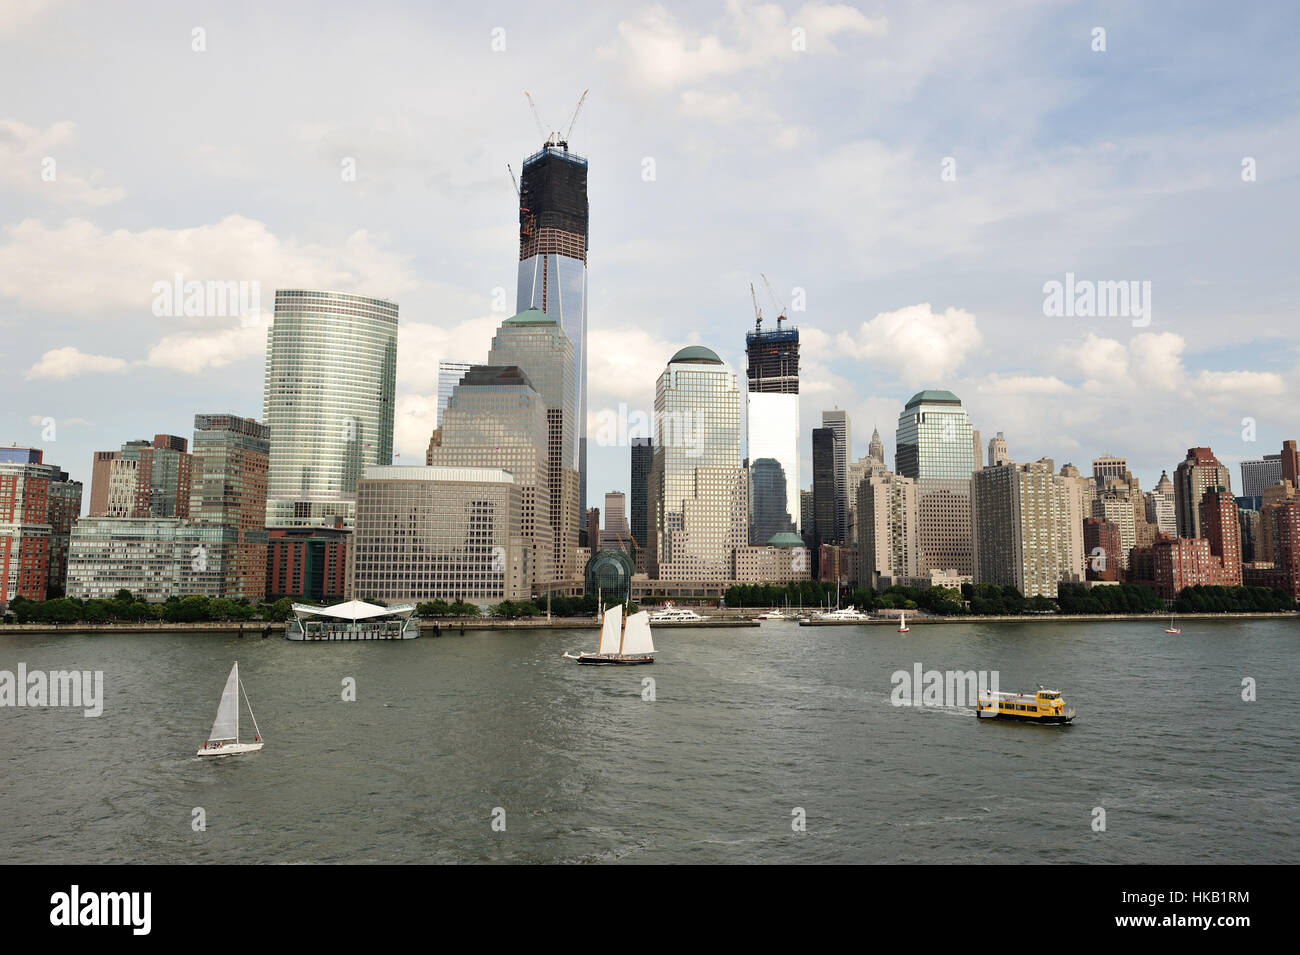 Biulding skyscrapers in Manhattan Island Stock Photo